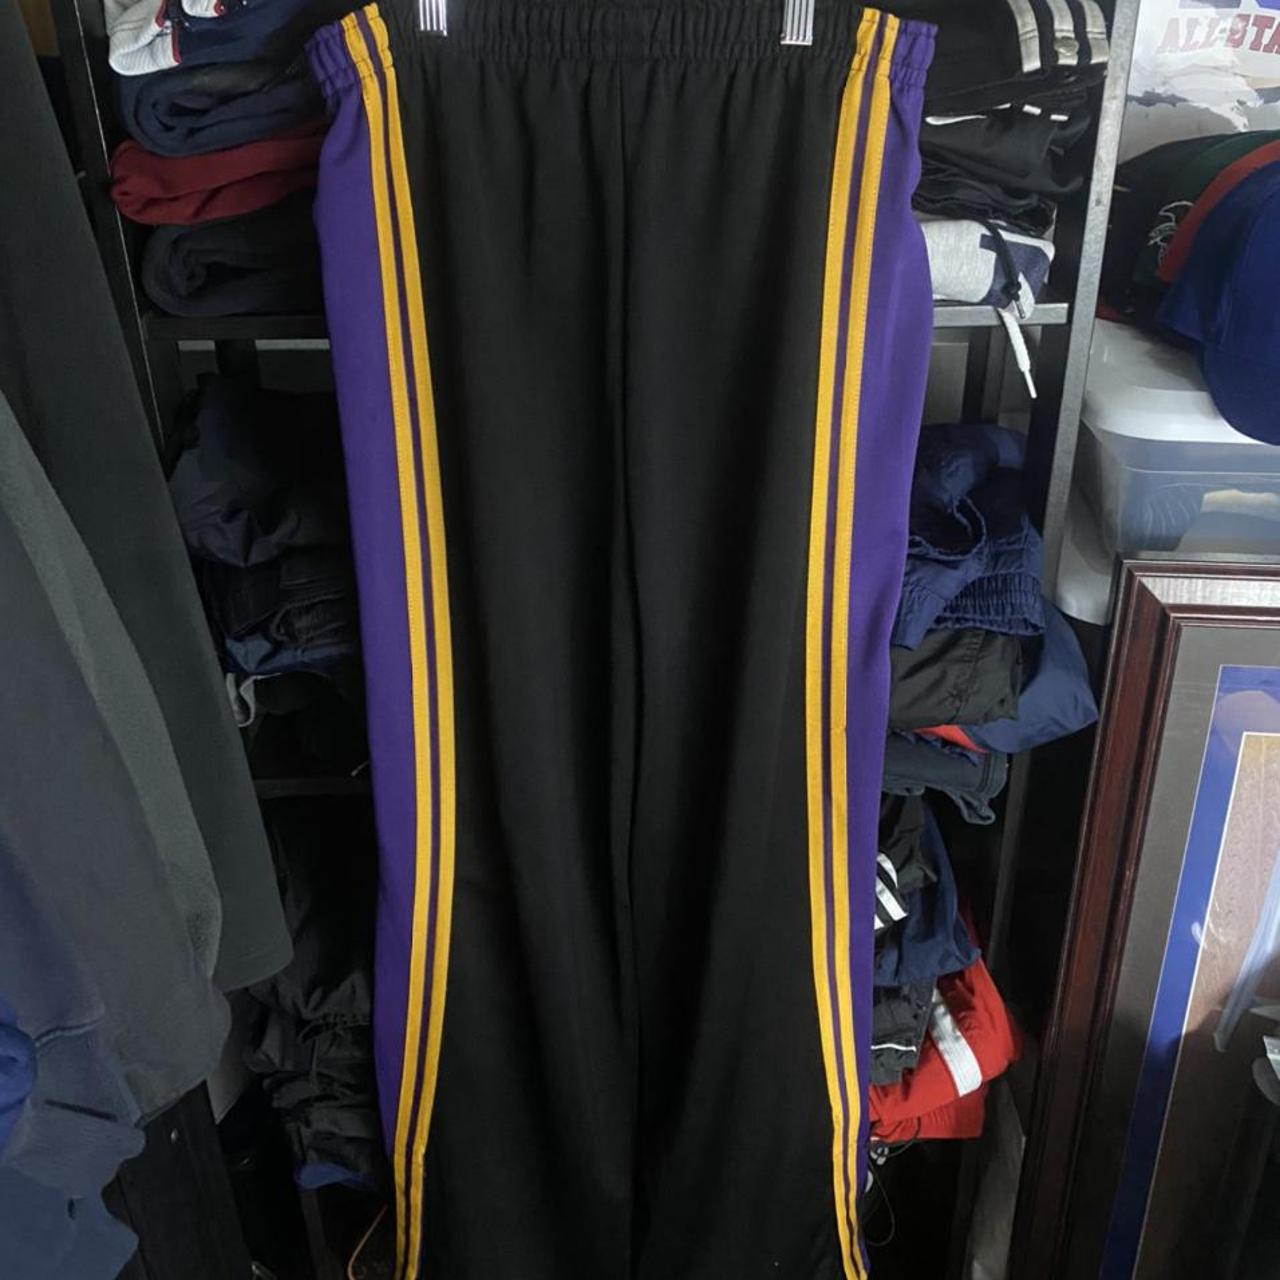 Vintage Adidas Lakers Hoodie!! 10/10 condition no - Depop